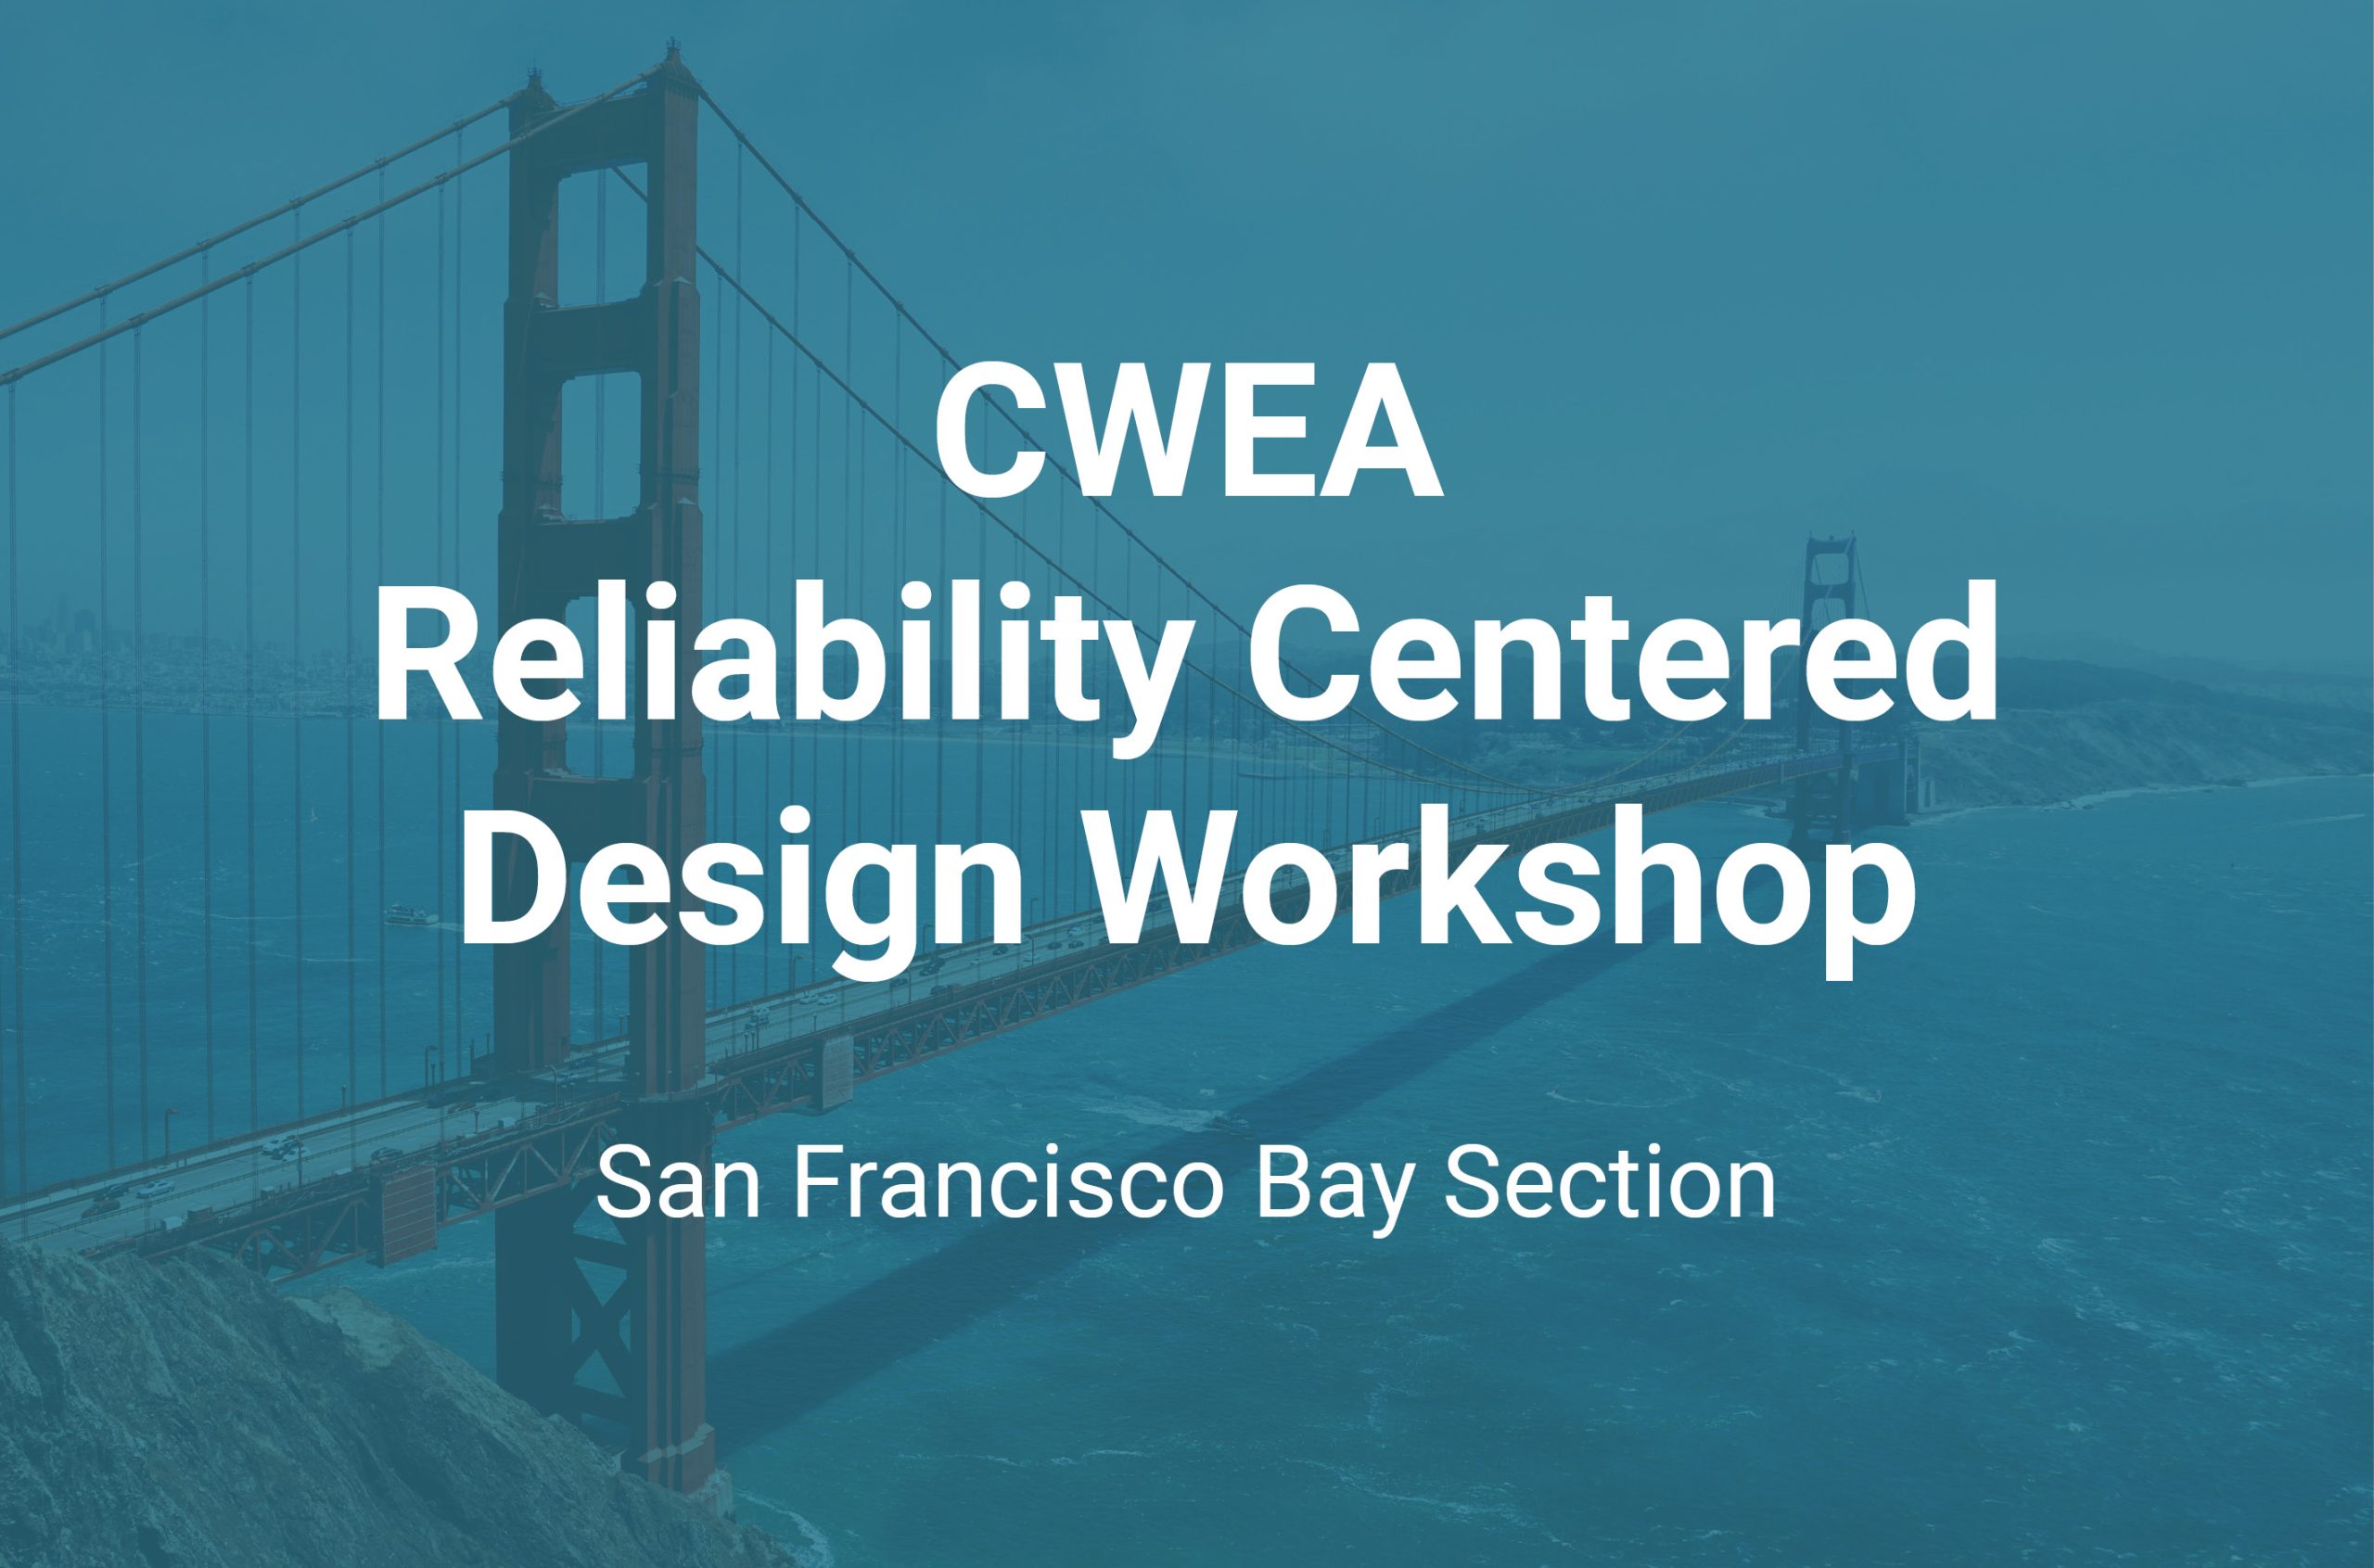 Get Ready for San Francisco Bay CWEA’s RCD November 8th